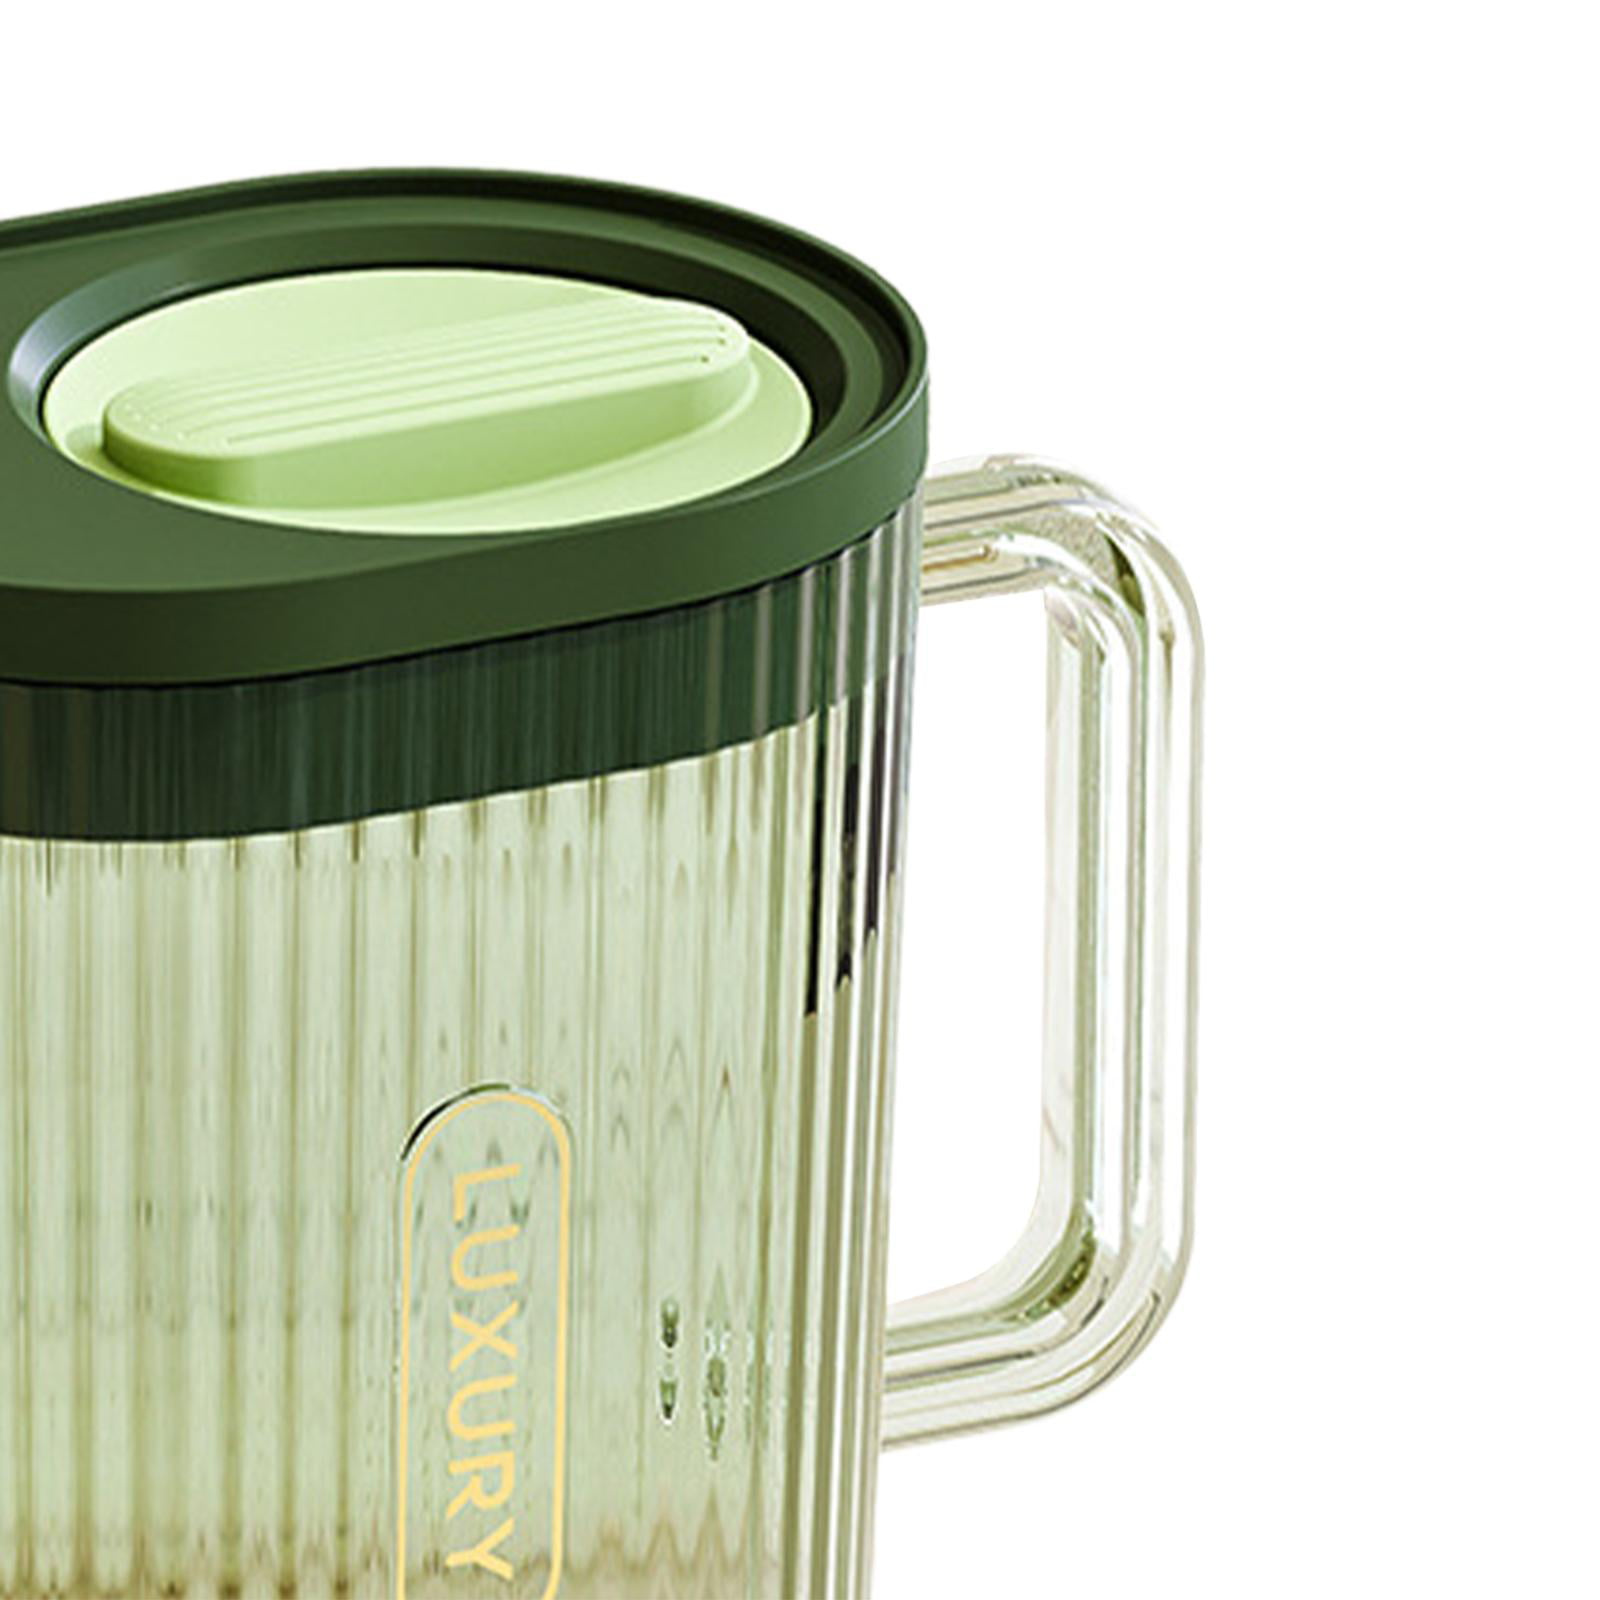 The Big Iced Tea Pitcher - 1 gallon - Green